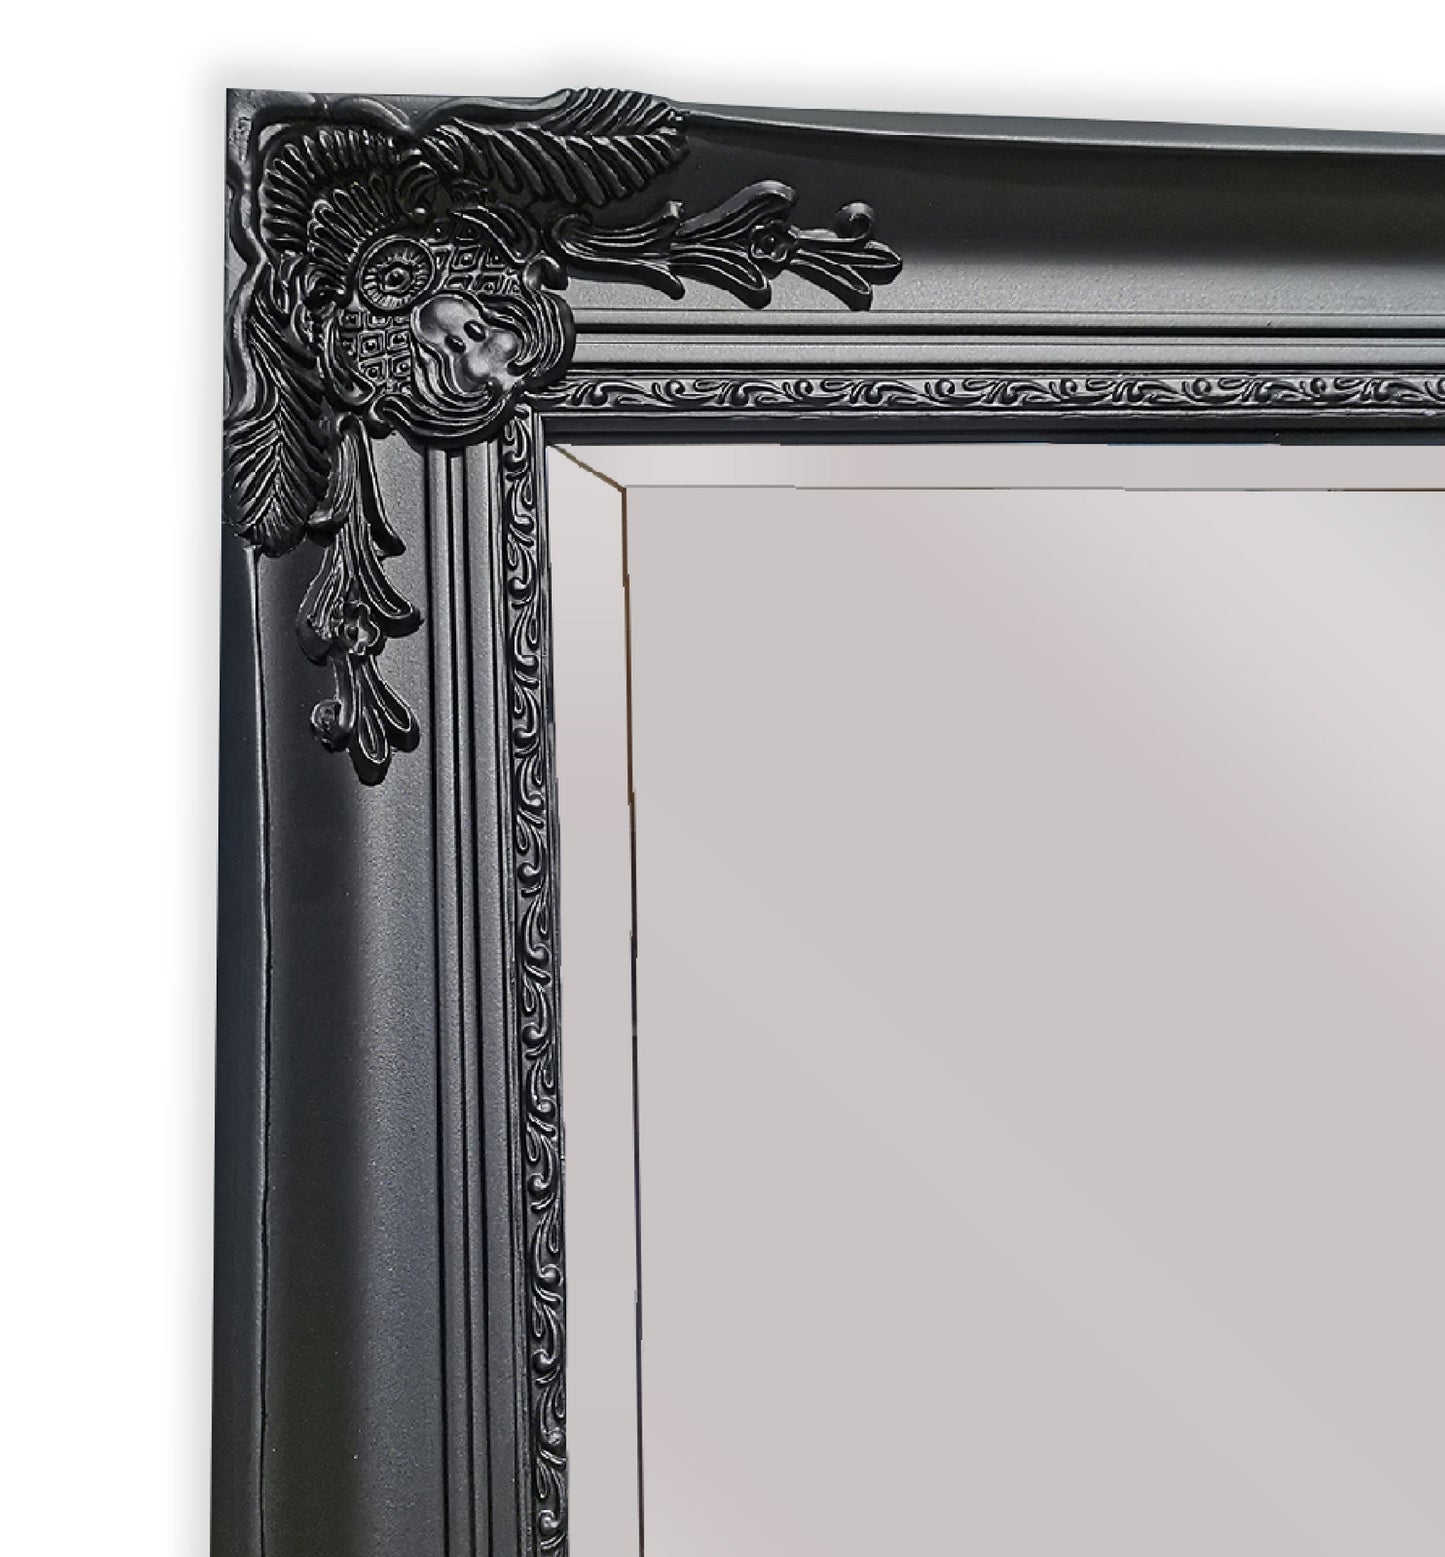 French Provincial Ornate Mirror - Black - Small 80cm x 110cm - image2